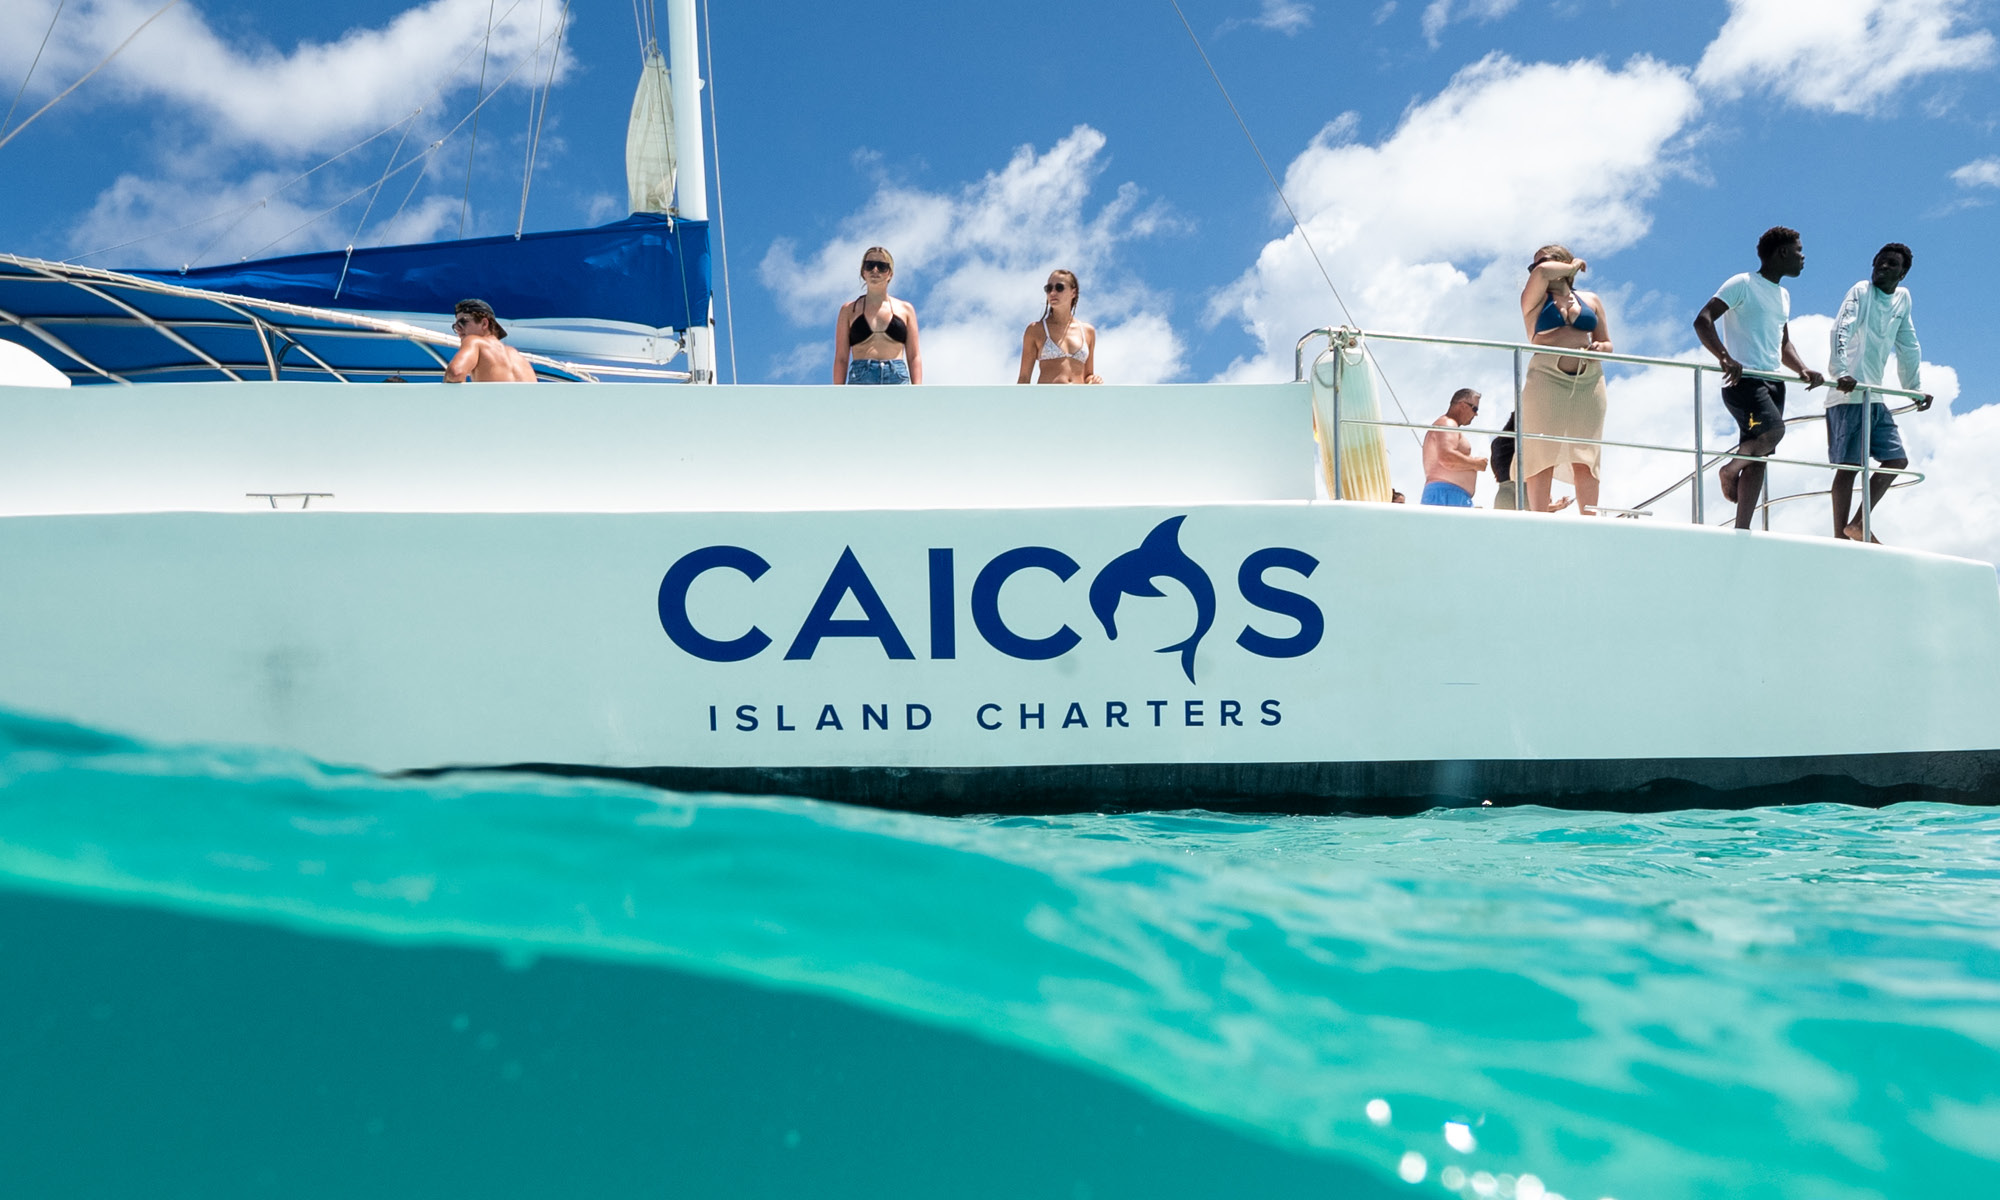 Caicos_island_charters_turks-caicos-tour-guides-boating-brand-design-website-ft-2